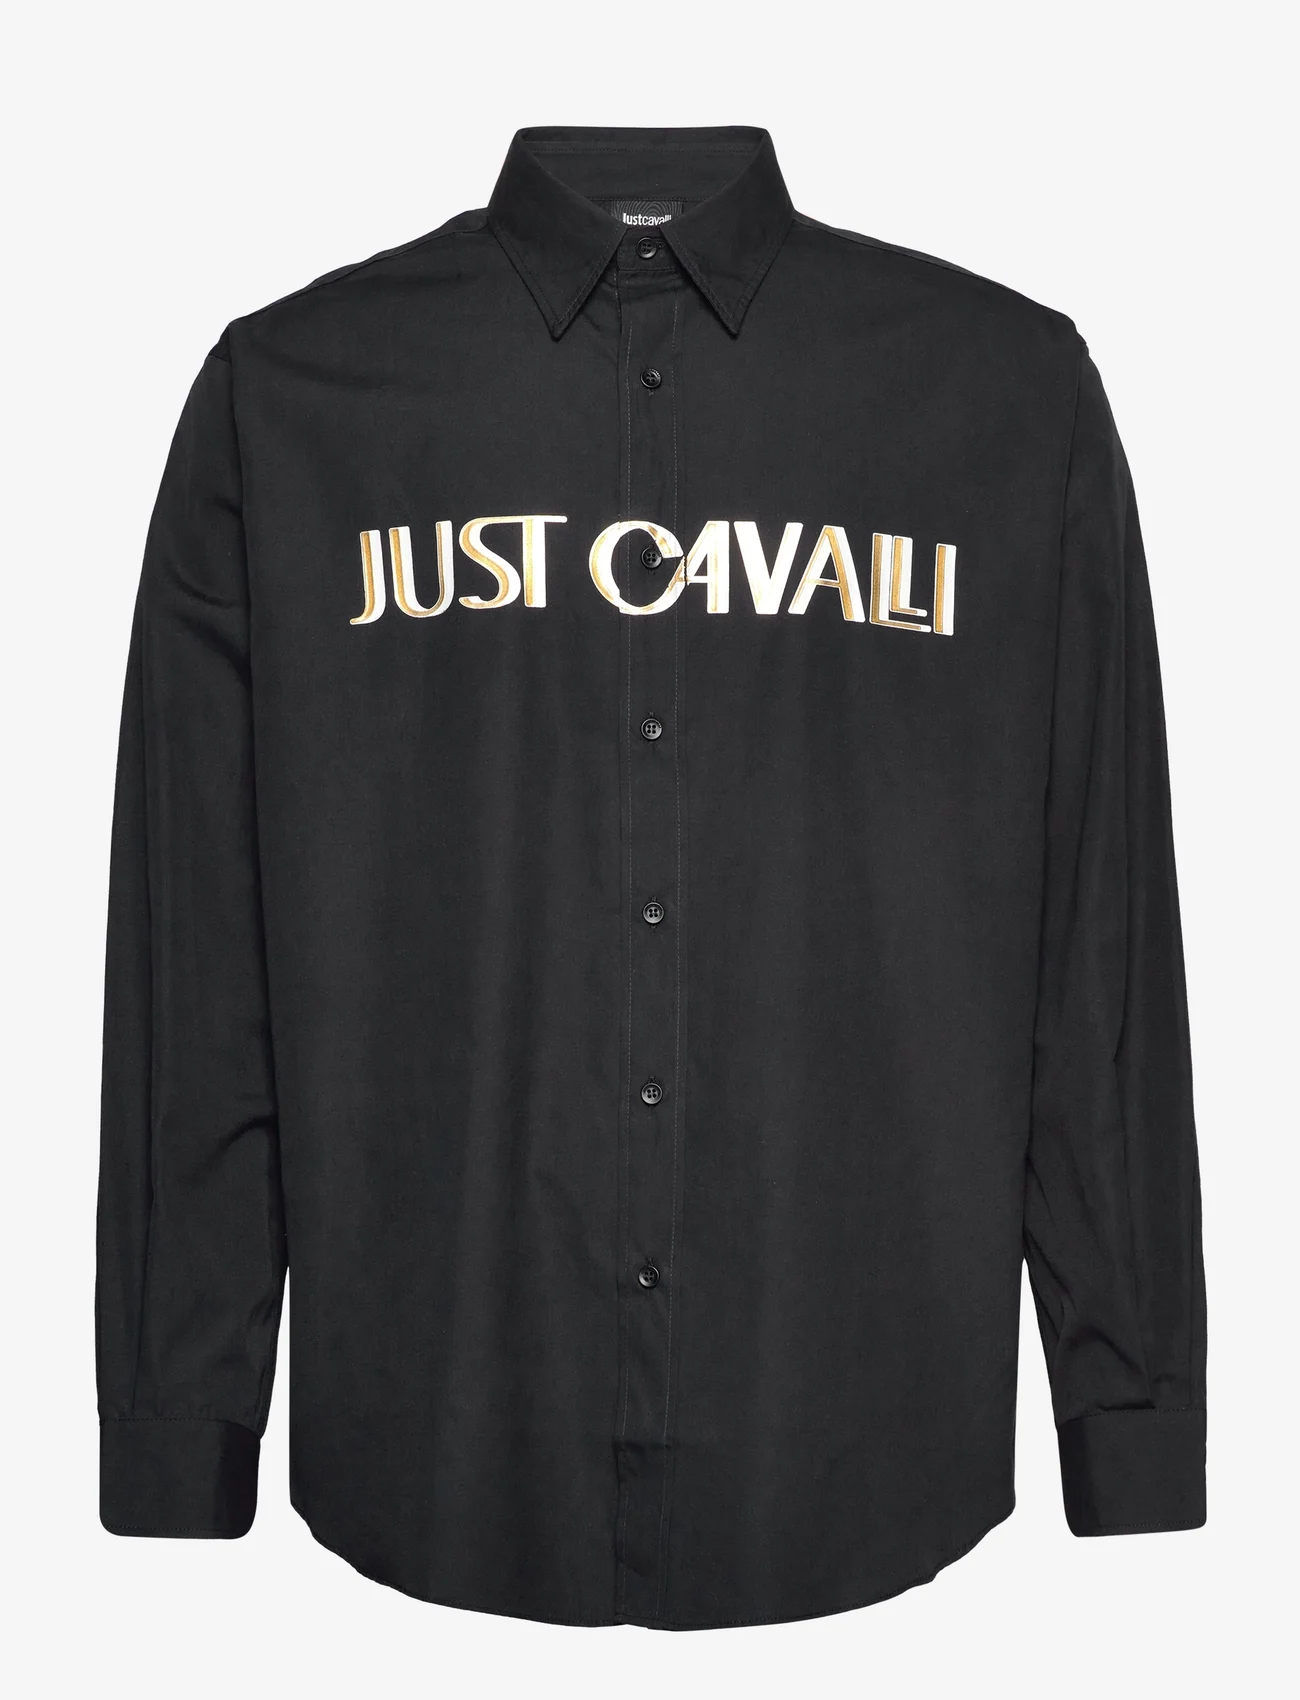 Just Cavalli - SHIRT - casual shirts - black - 0